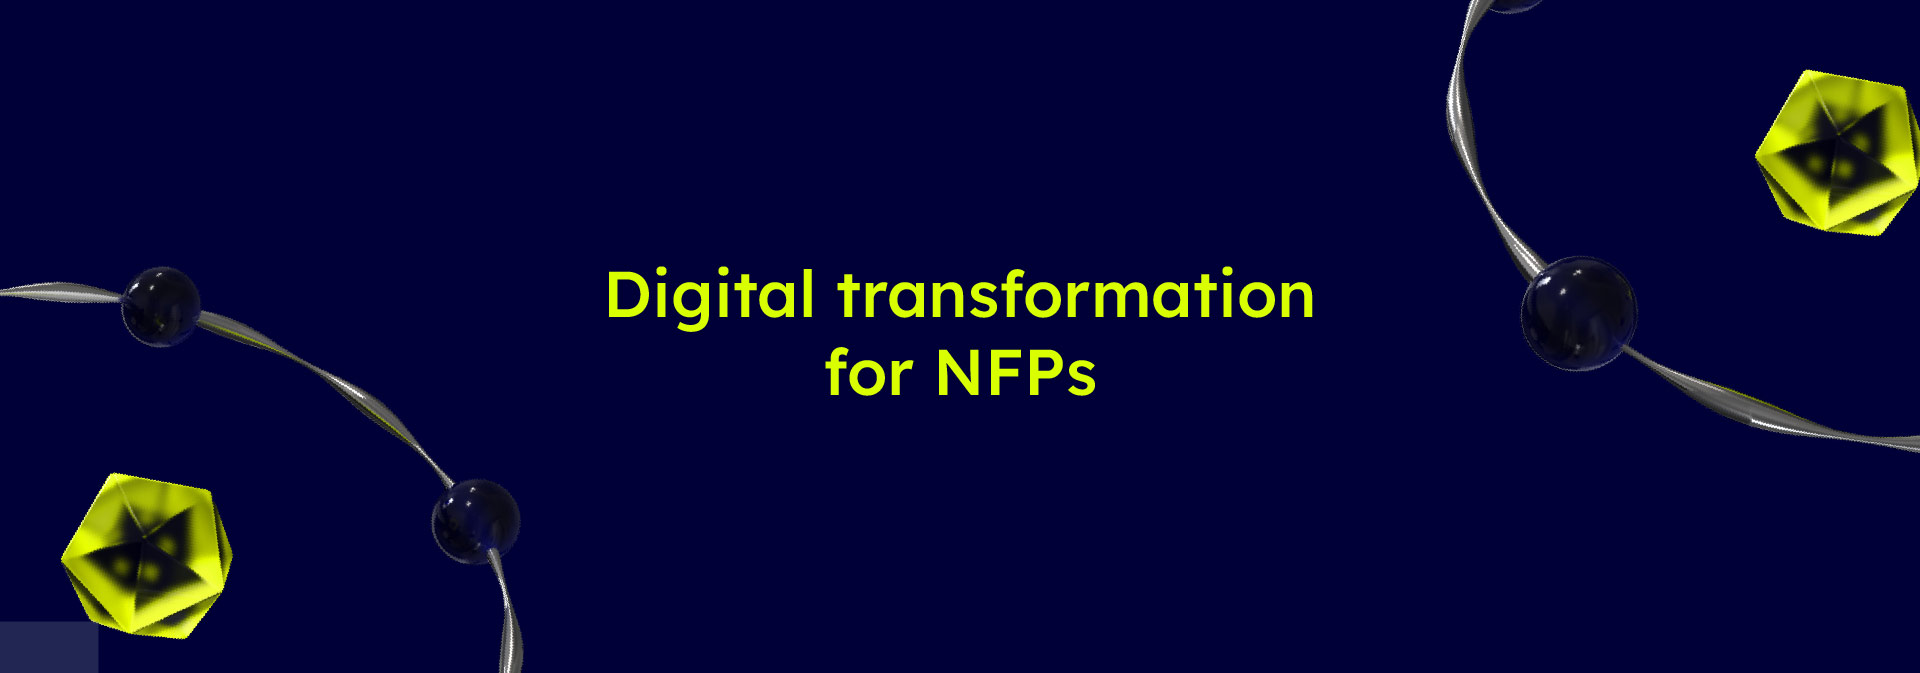 Digital transformation for NFPs